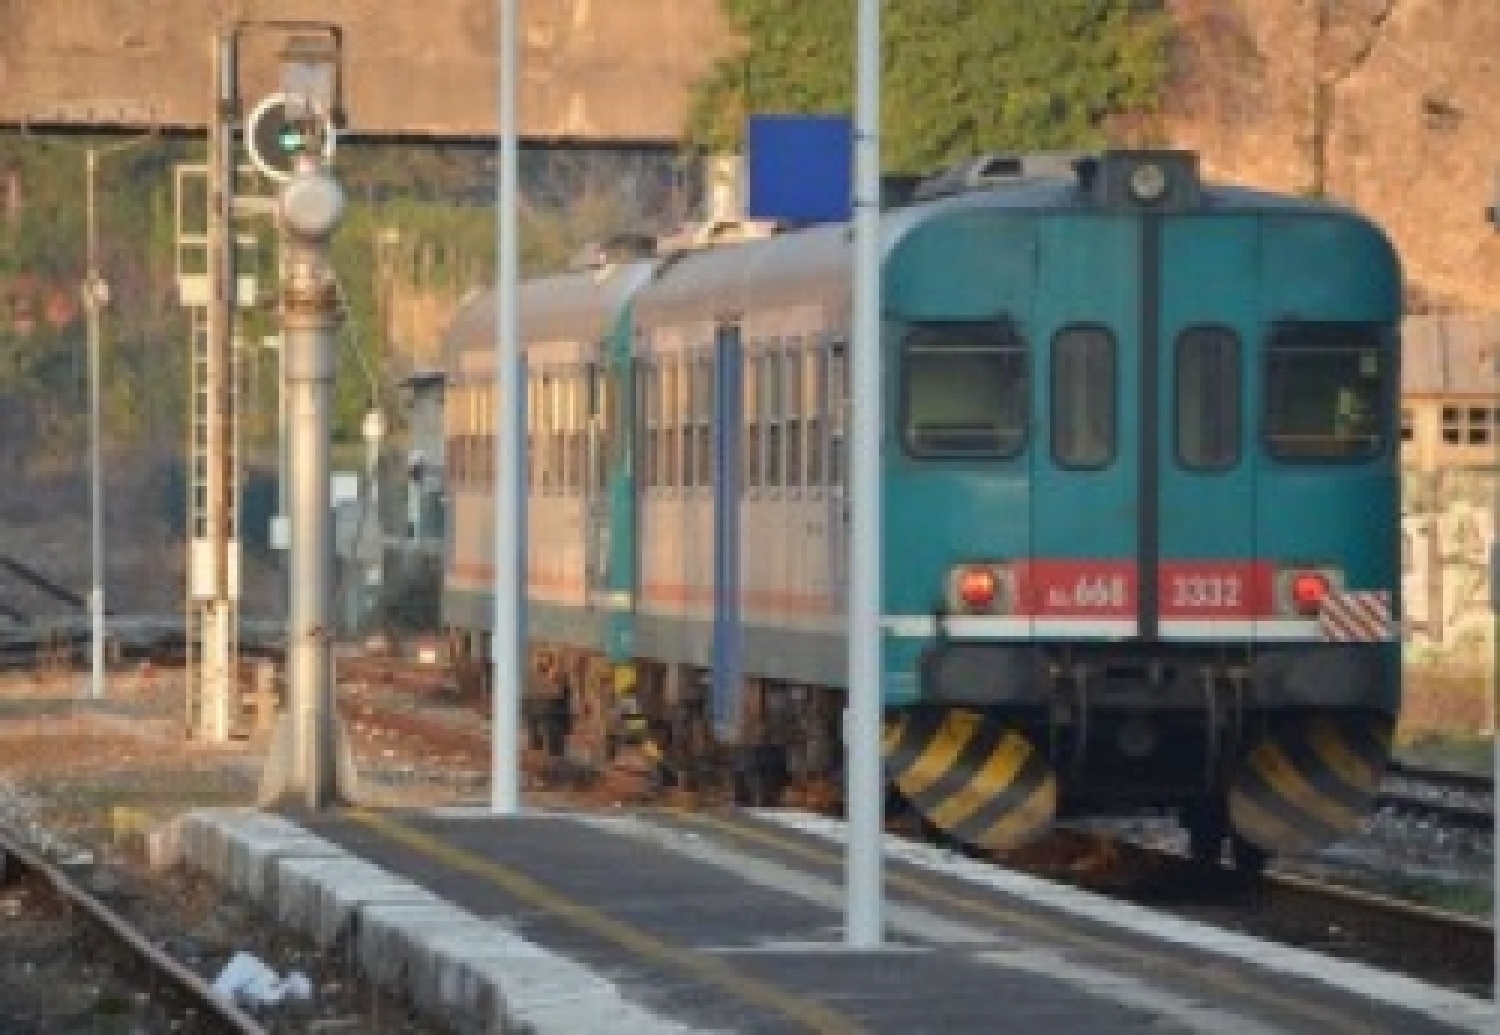 Ferrovia-290x200.jpg